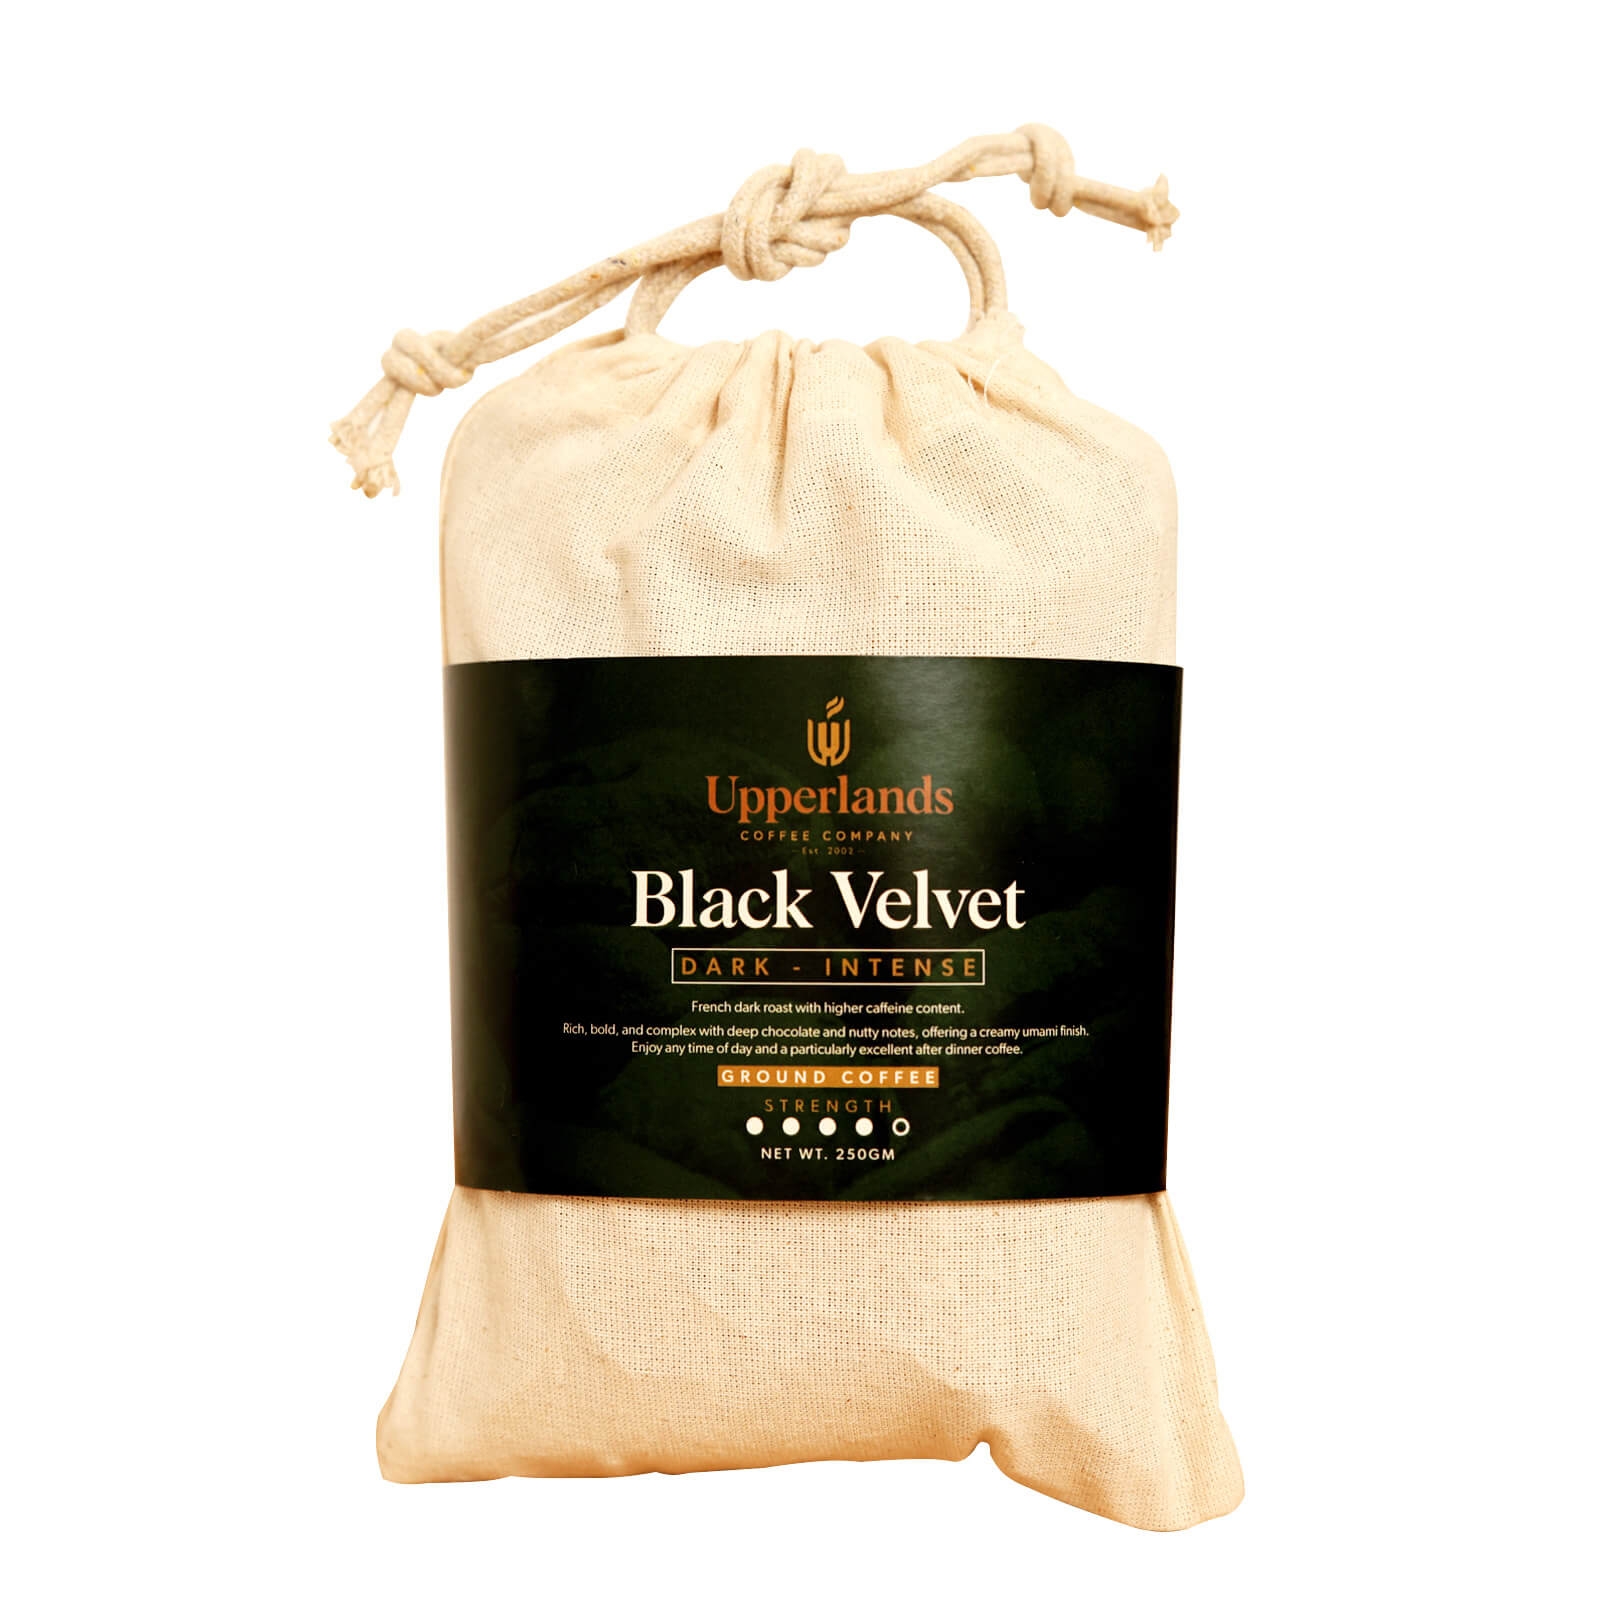 Blackvelvet coffee